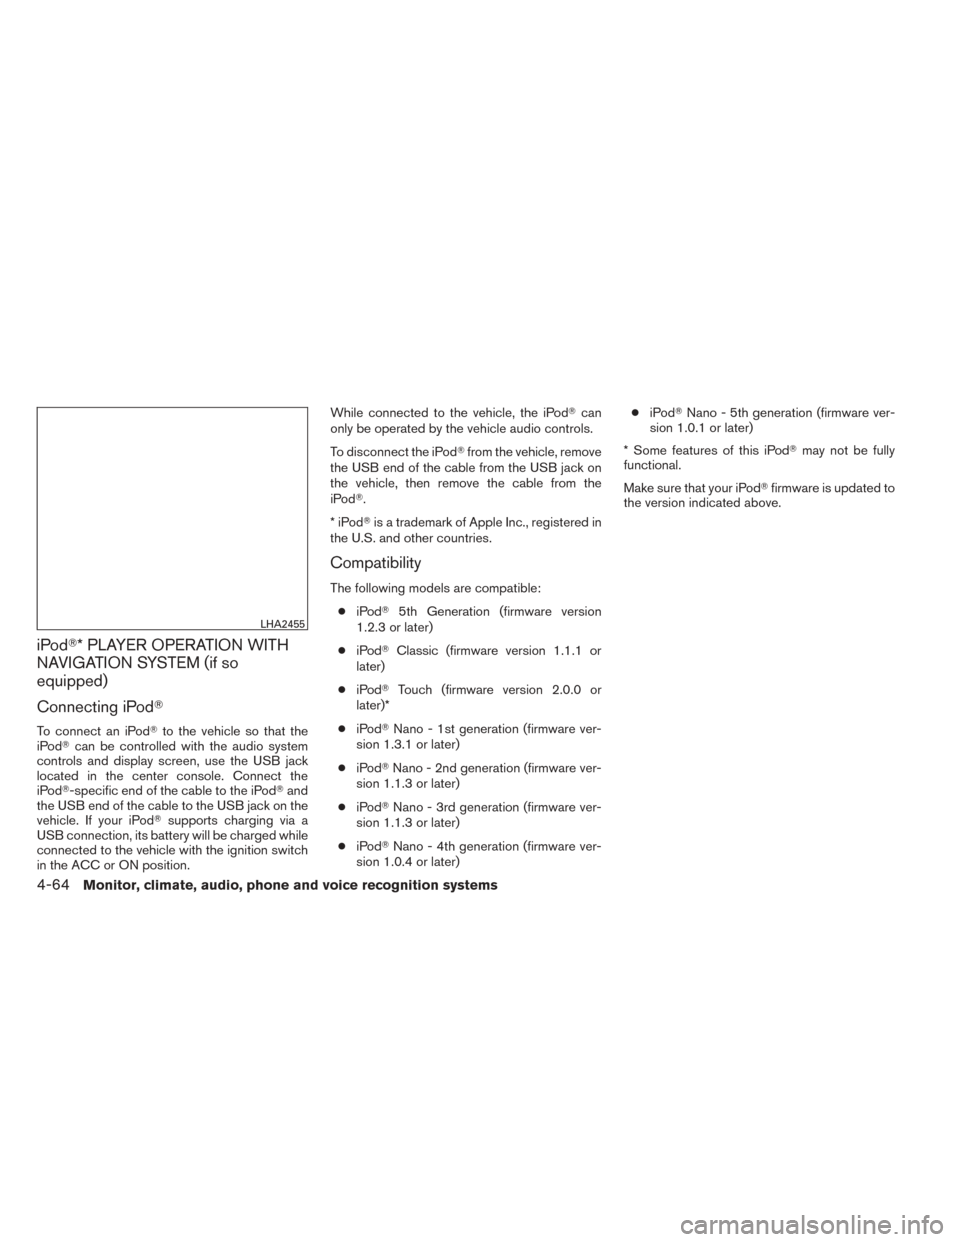 NISSAN TITAN 2014 1.G Owners Manual iPod* PLAYER OPERATION WITH
NAVIGATION SYSTEM (if so
equipped)
Connecting iPod
To connect an iPod to the vehicle so that the
iPod can be controlled with the audio system
controls and display scree